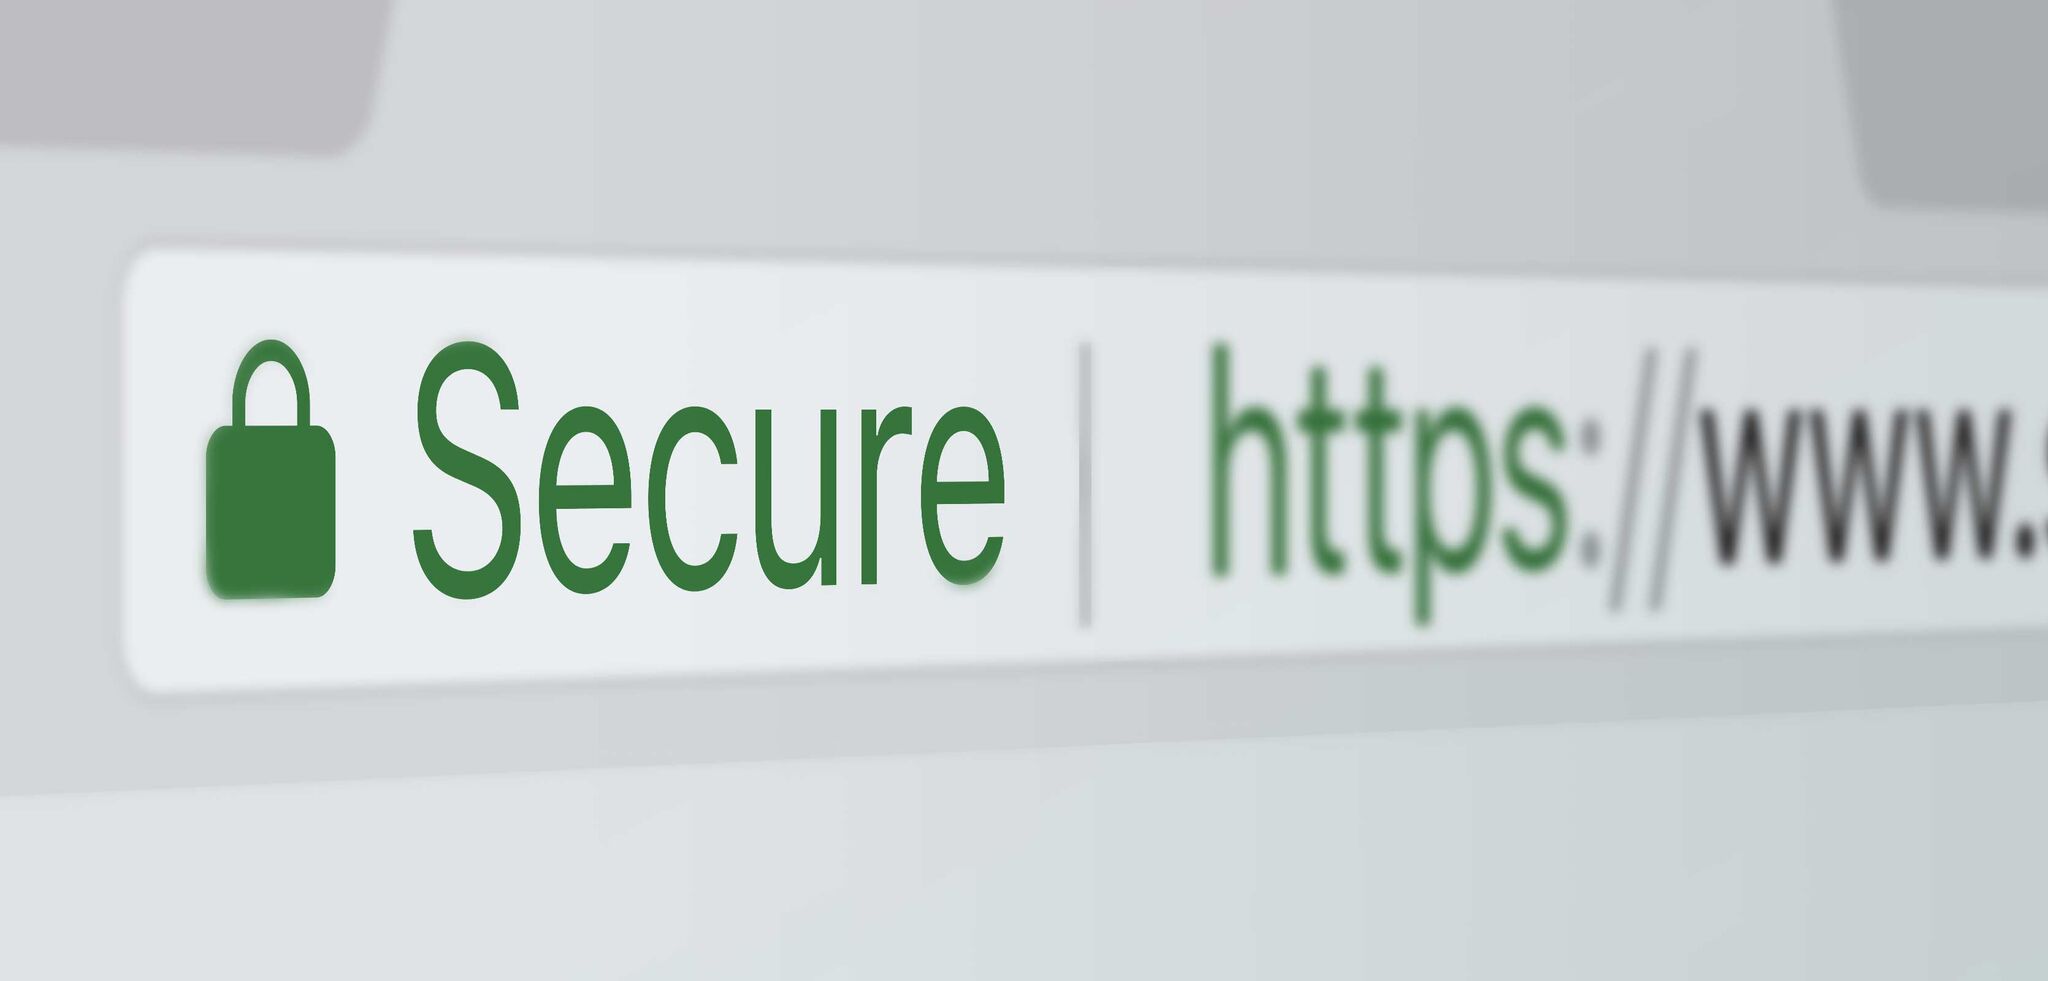 Https. SSL сертификат. SSL сертификат для сайта. SSL картинка. SSL логотип.